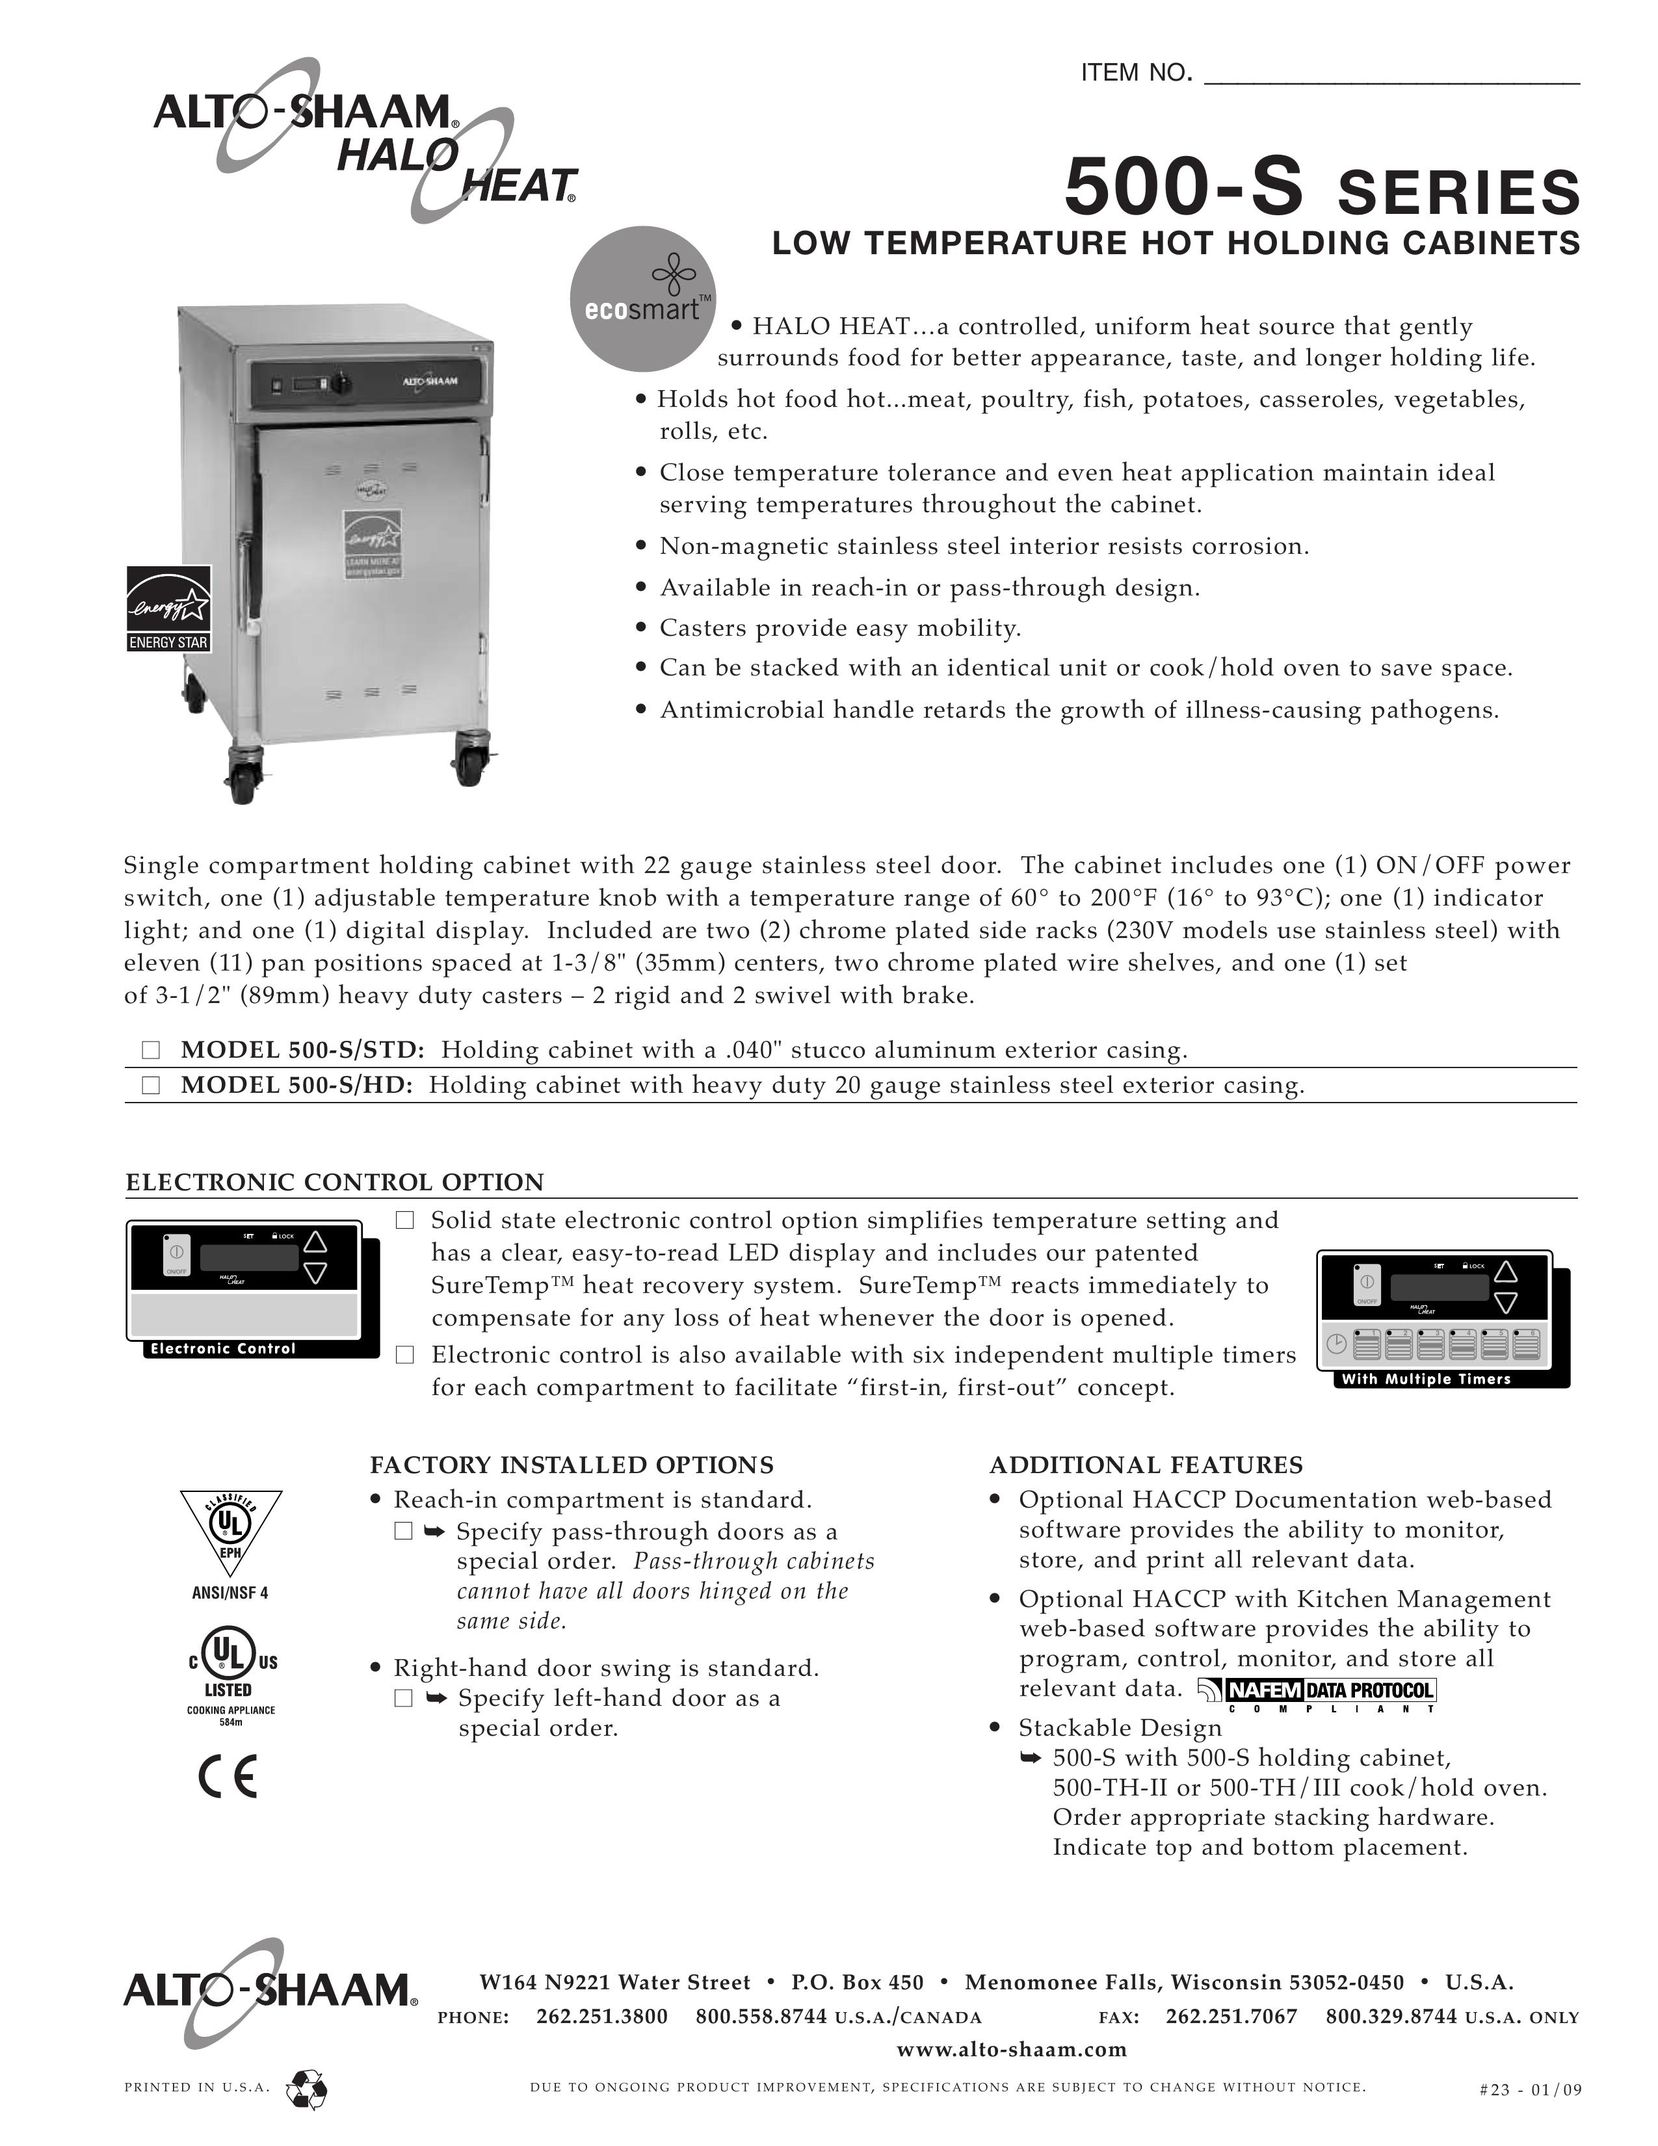 Alto-Shaam 500-S/HD Kitchen Entertainment Center User Manual